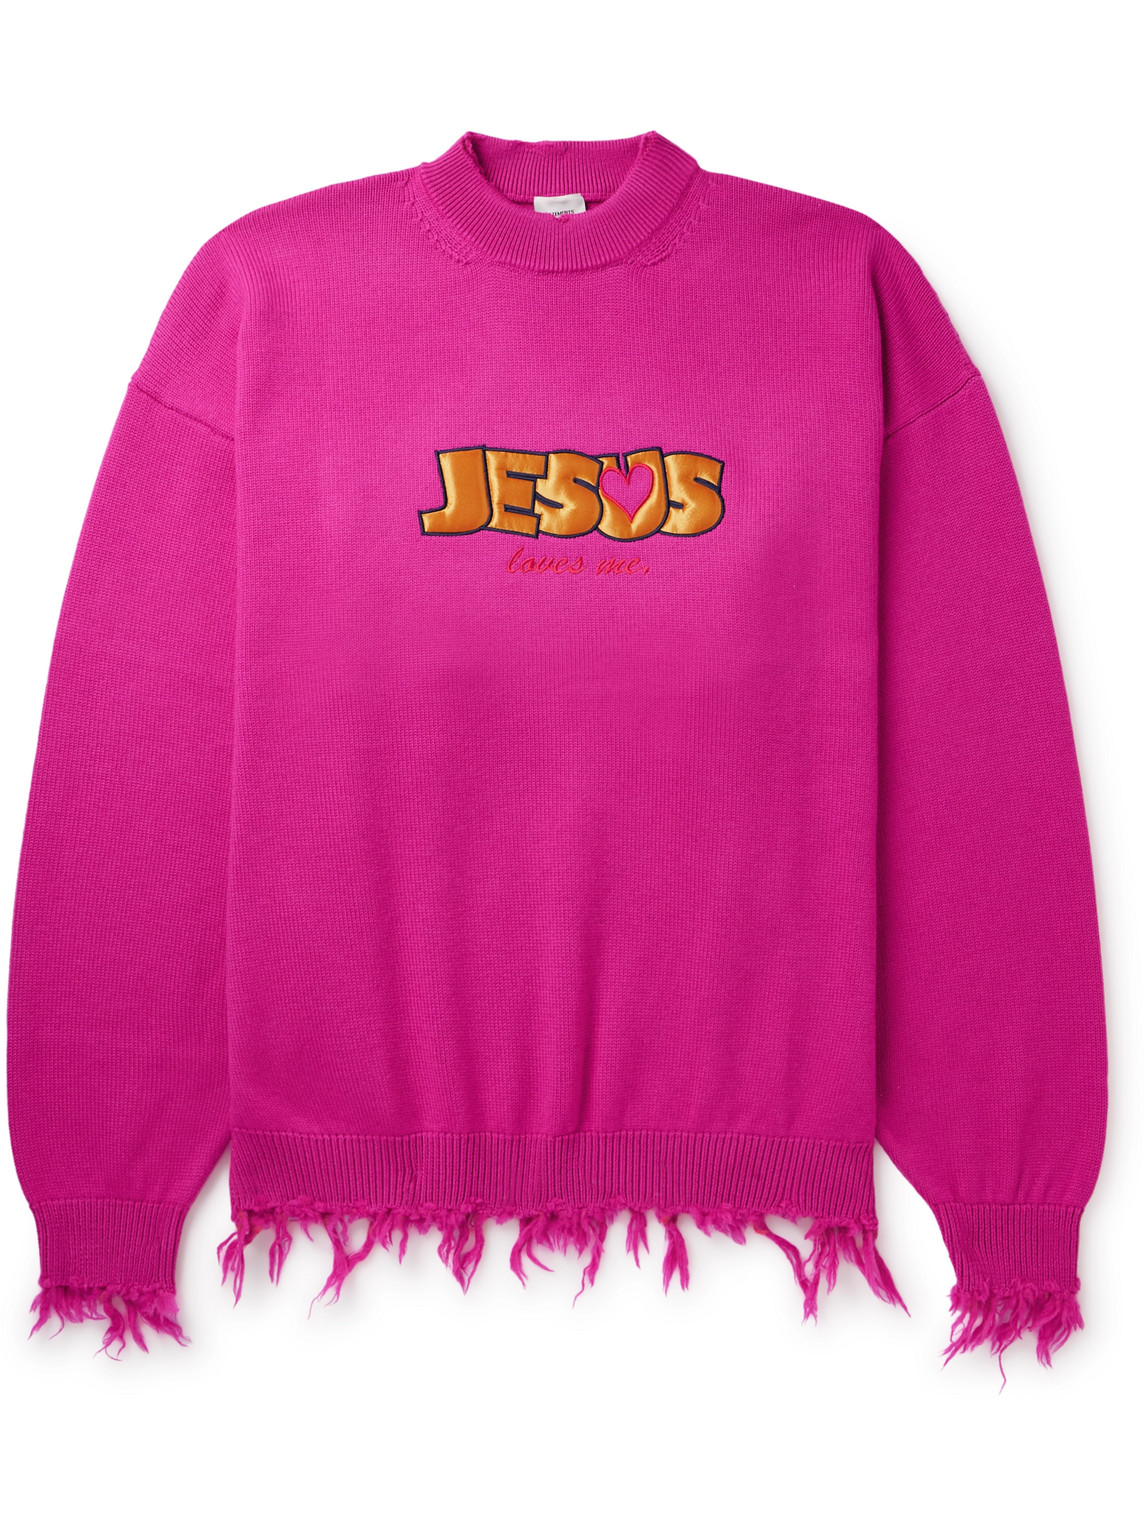 VETEMENTS - Jesus Loves You Distressed Merino Wool Sweater - Men - Pink - S von VETEMENTS